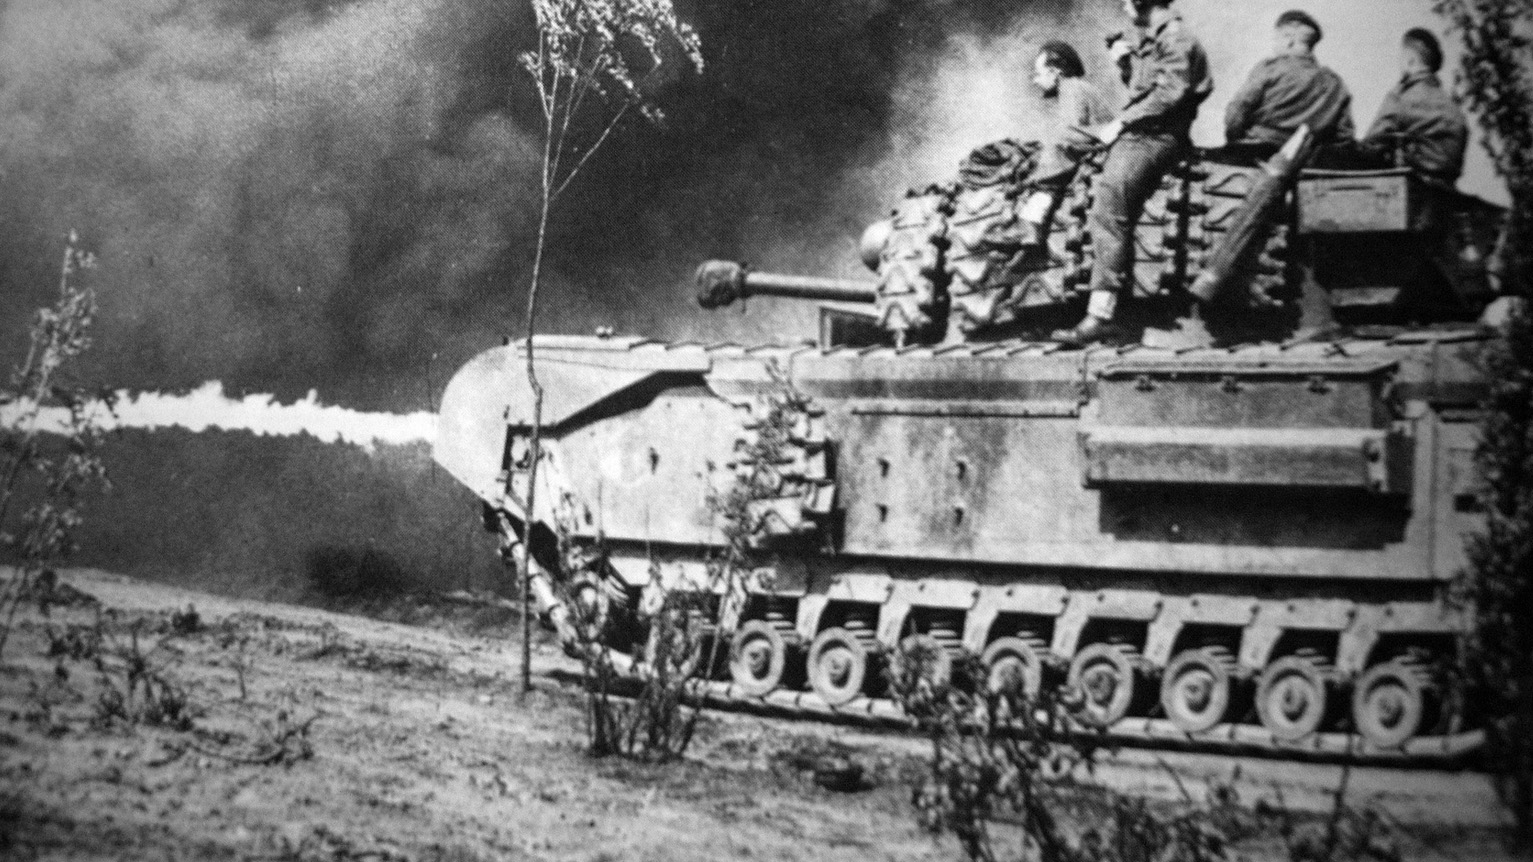 Ordnance: The British Churchill Tank - Warfare History Network